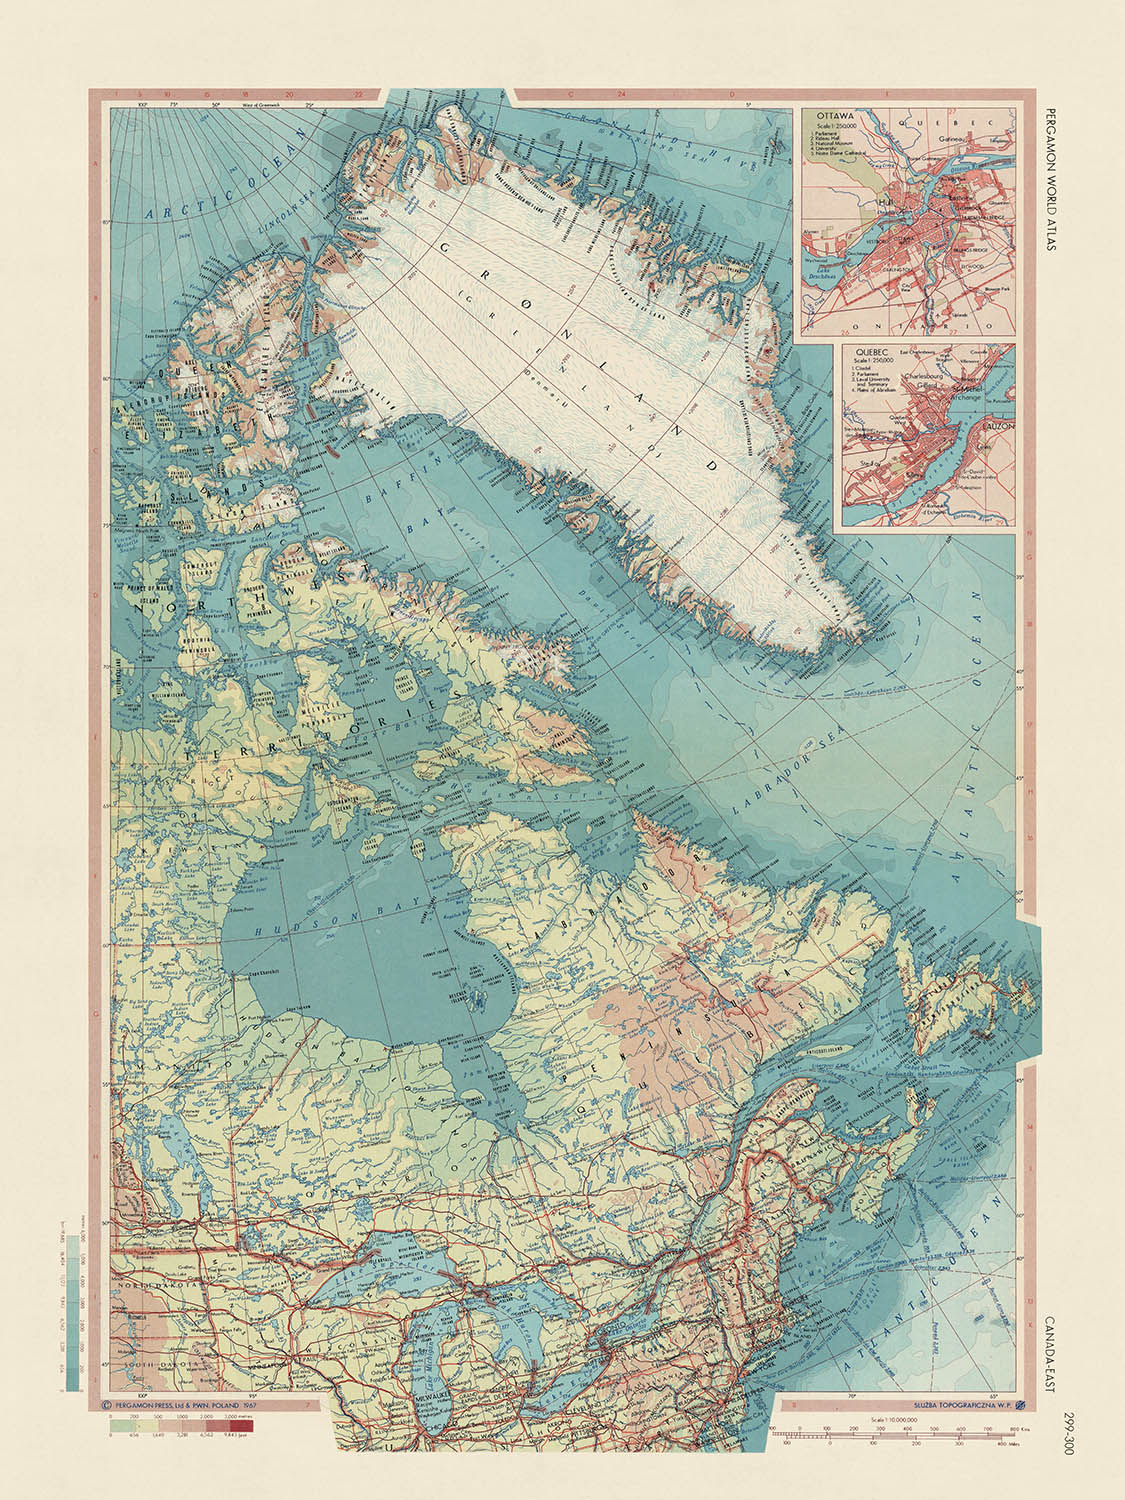 Old Map of Eastern Canada, 1967: Ontario, Greenland, Newfoundland, Labrador, Detailed Political & Physical Atlas